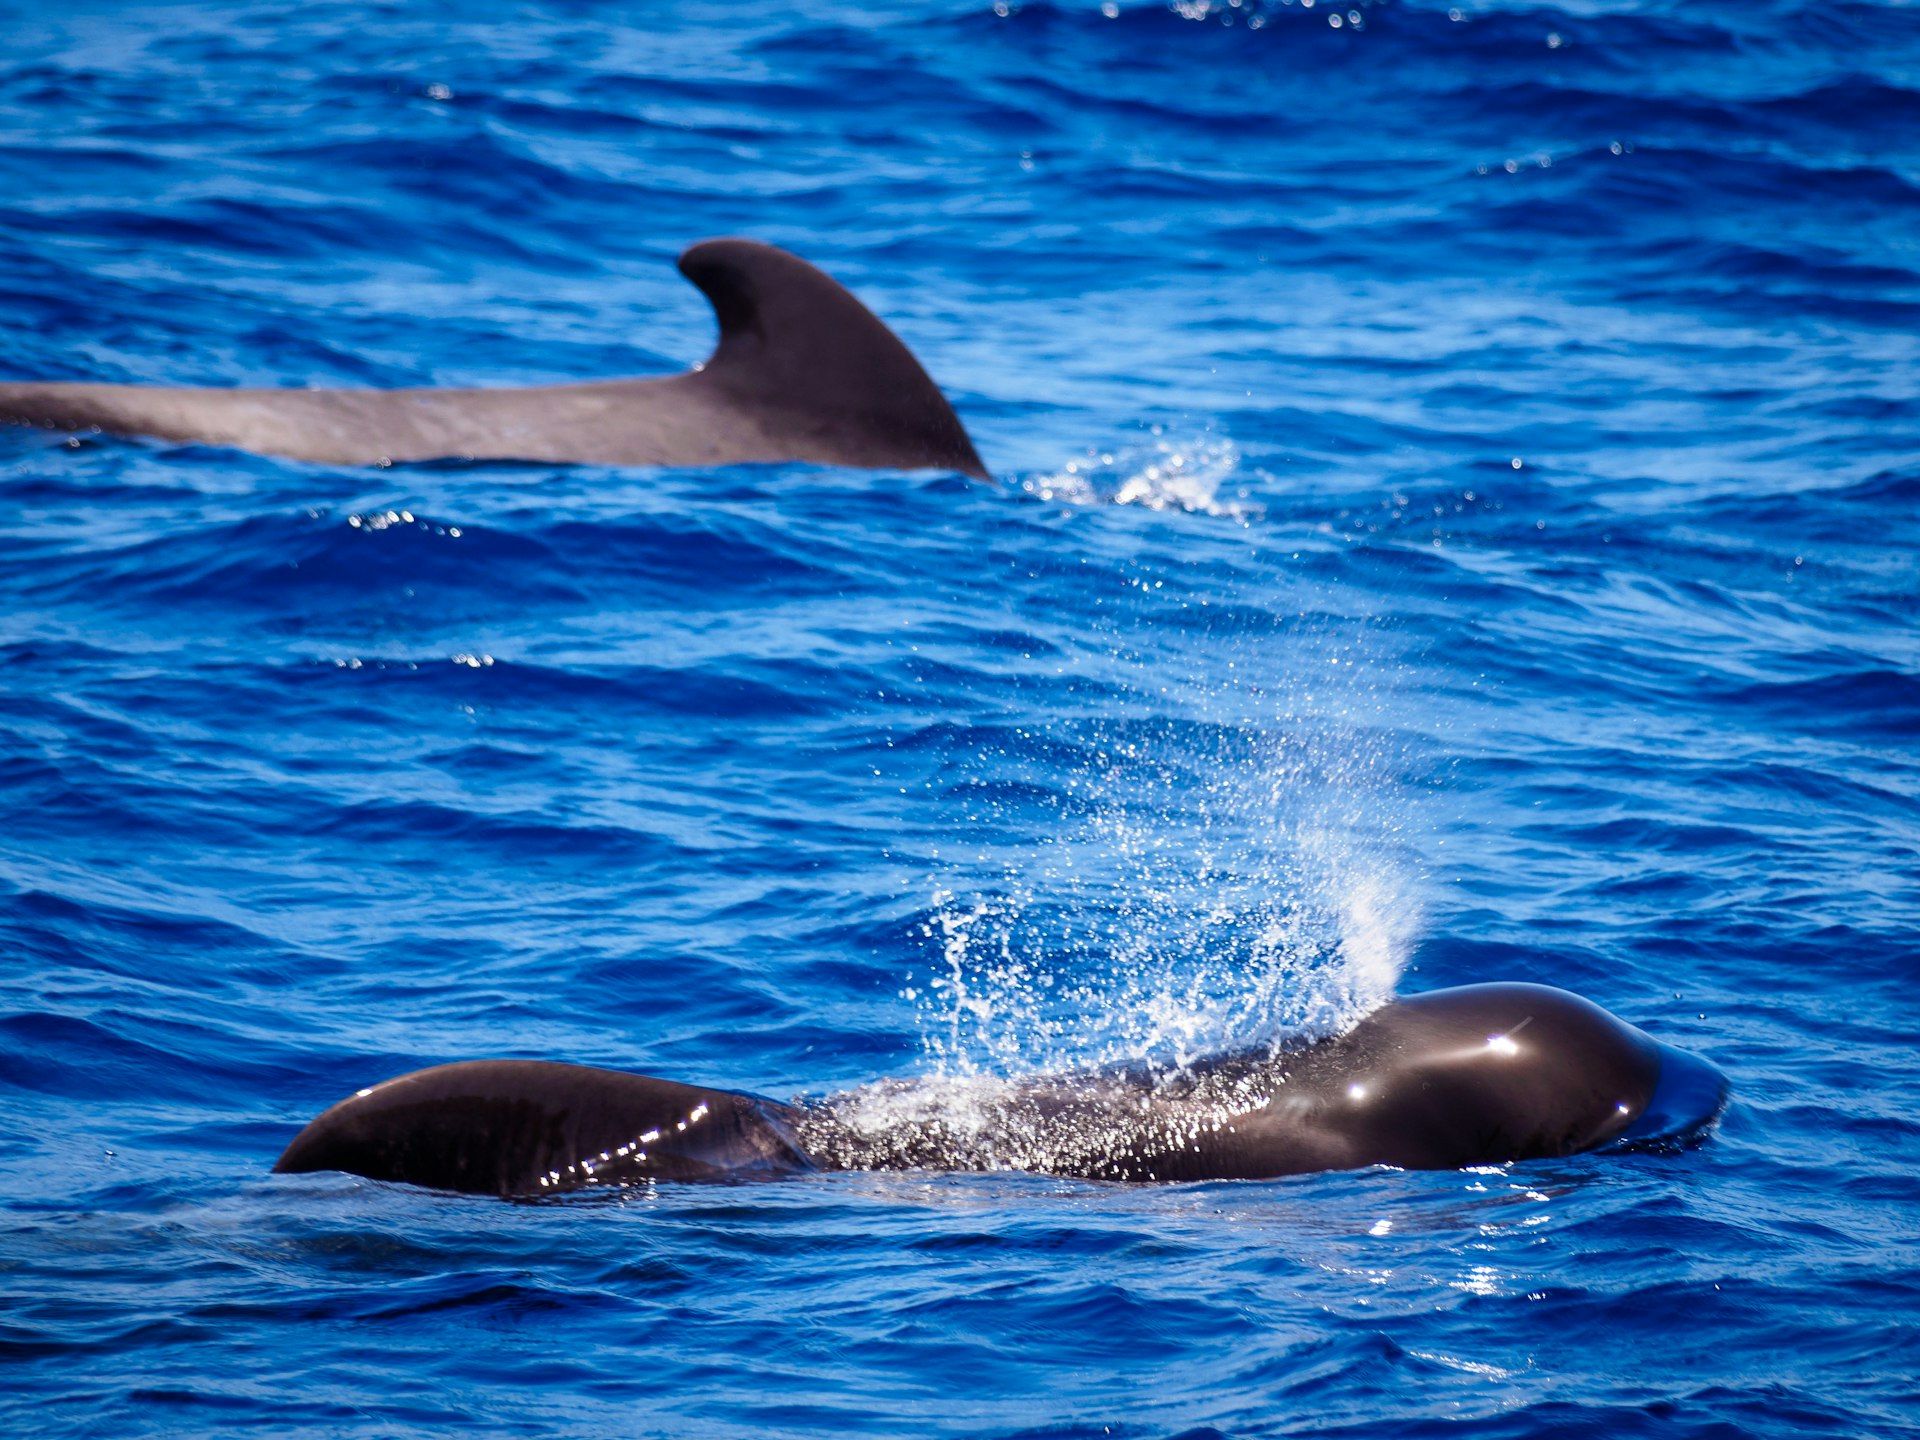 Pilot whales surfacing in open ocean near Tenerife